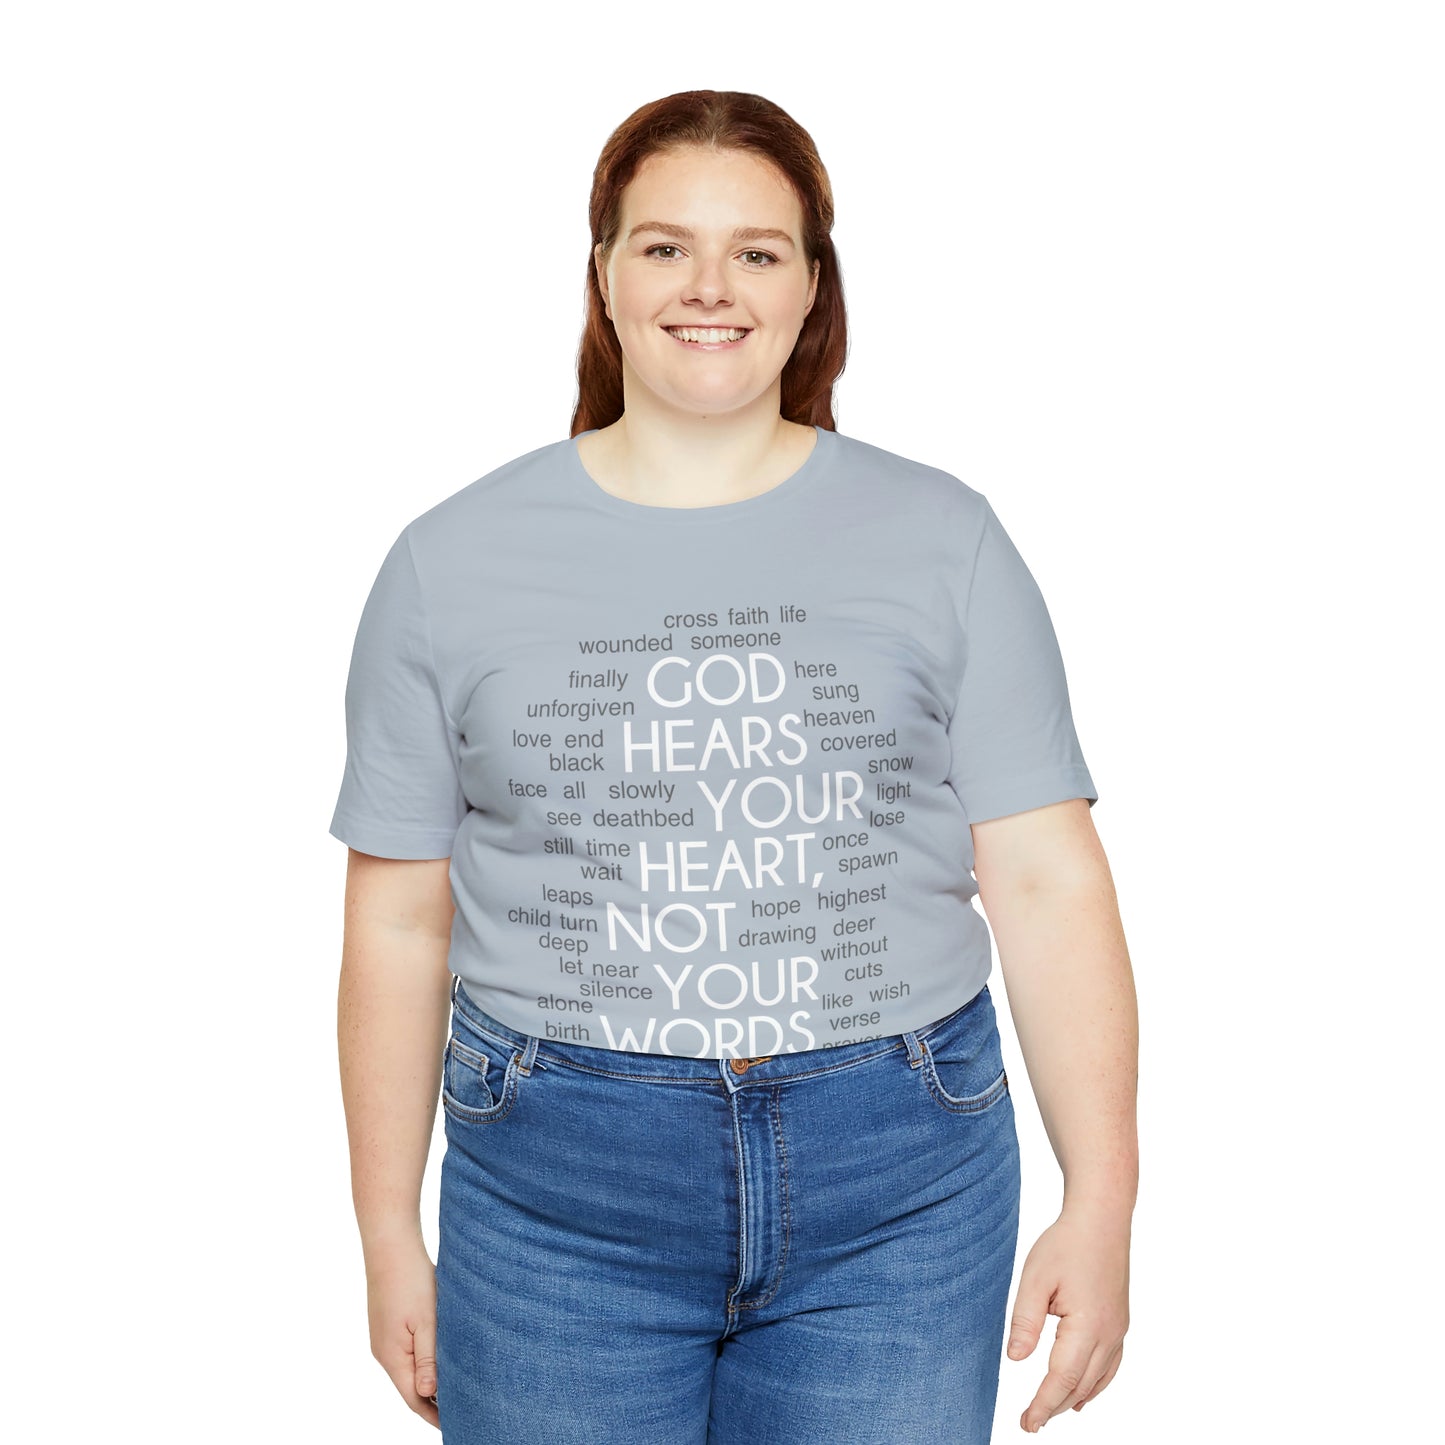 "God Hears Your Heart" T Shirt